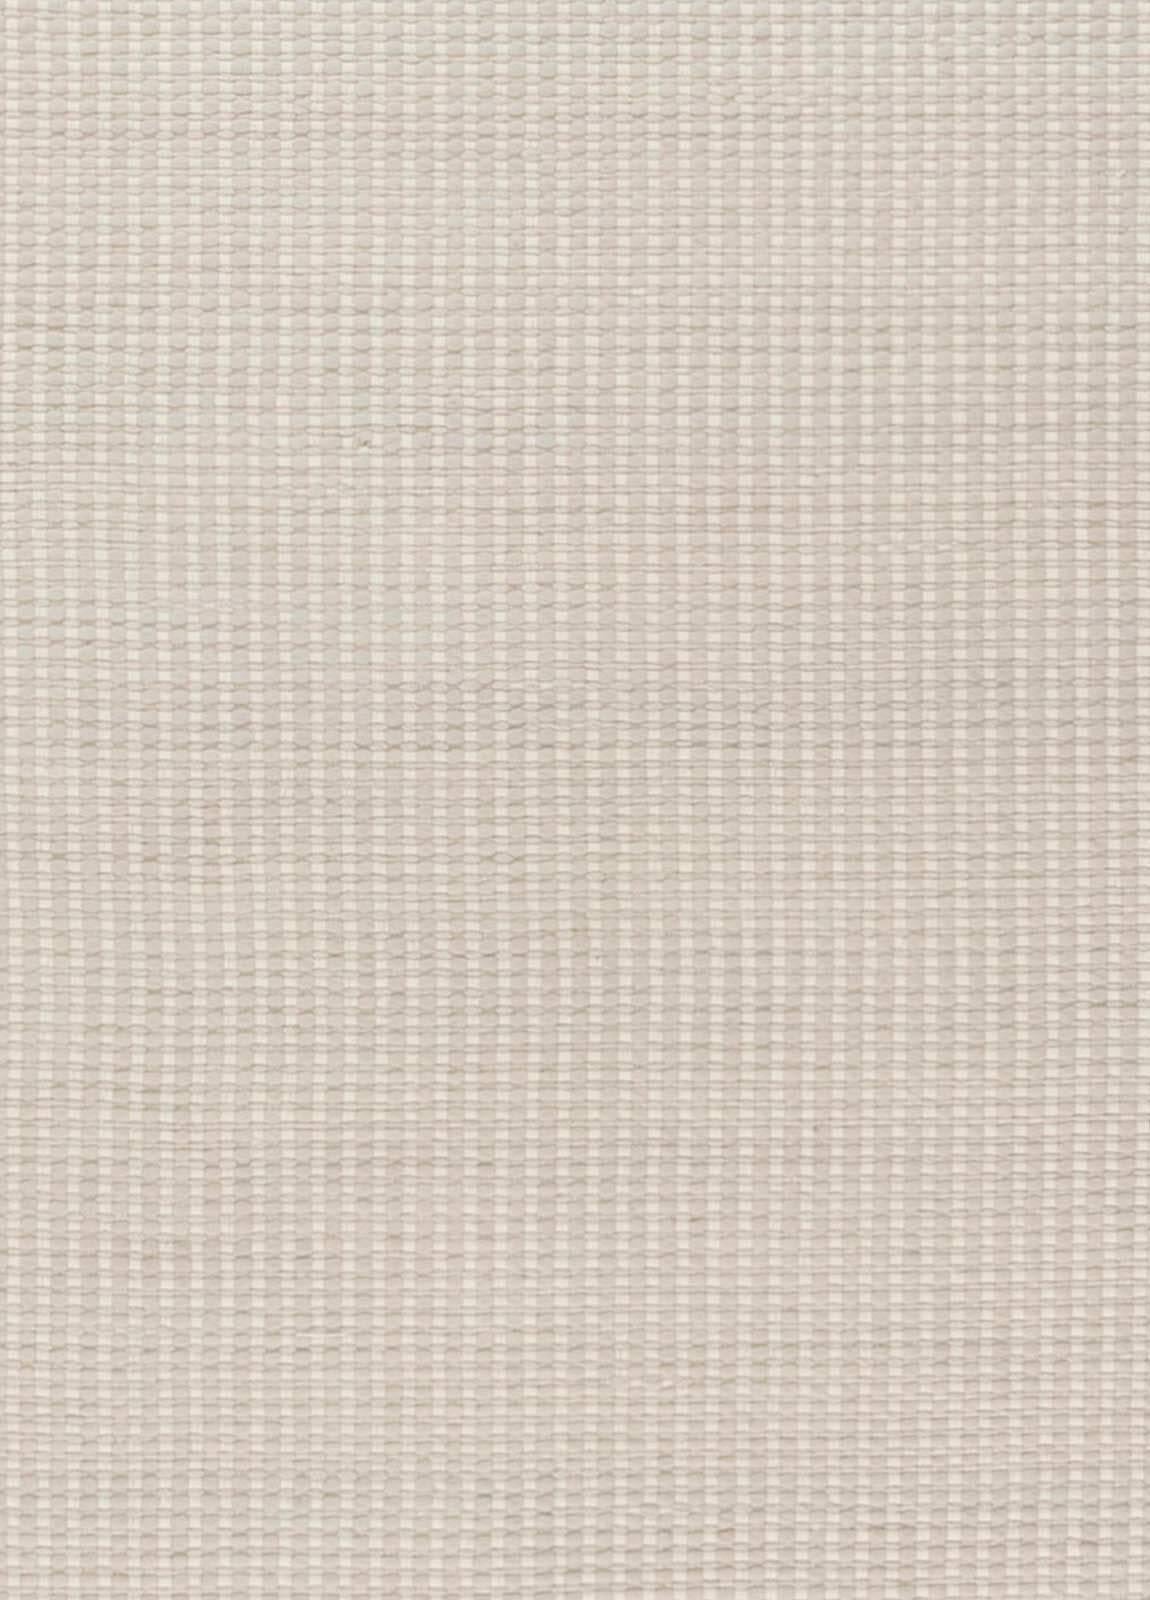 High-quality Modern Beige, Gray Flat-Weave Wool rug by Doris Leslie Blau
Size: 12'4